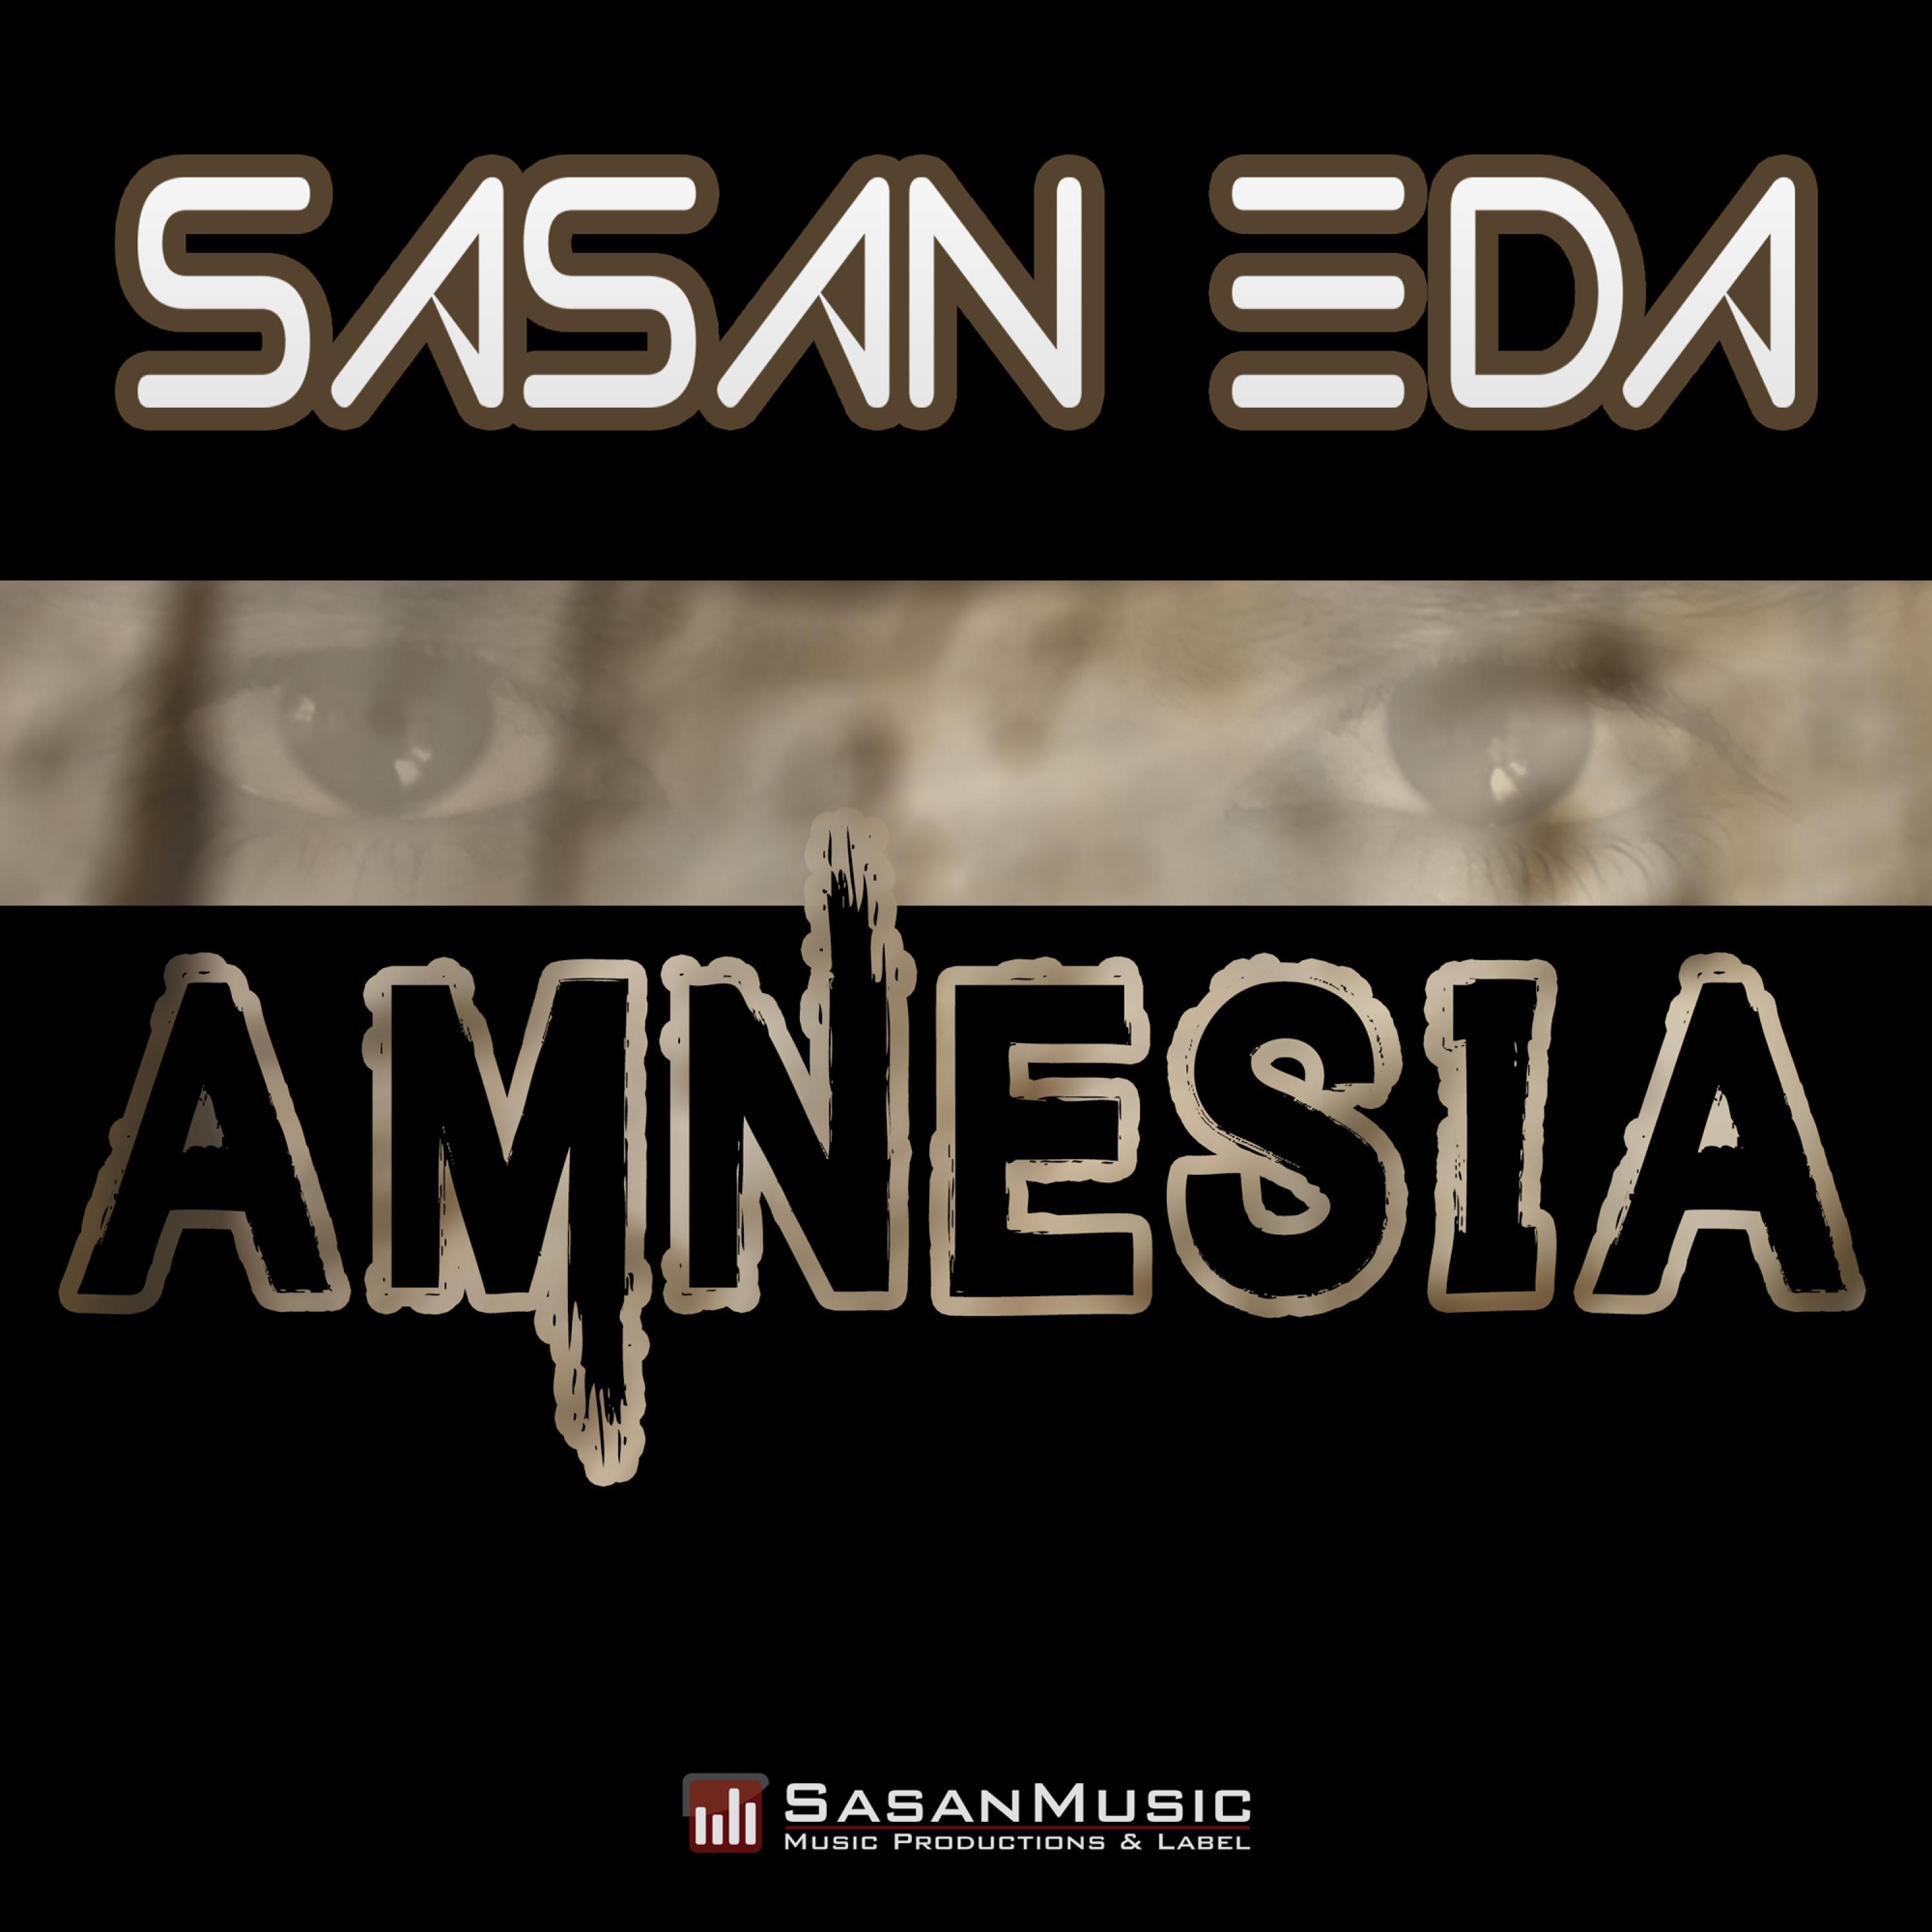 Sasan Eda - Amnesia (Radio Edit)